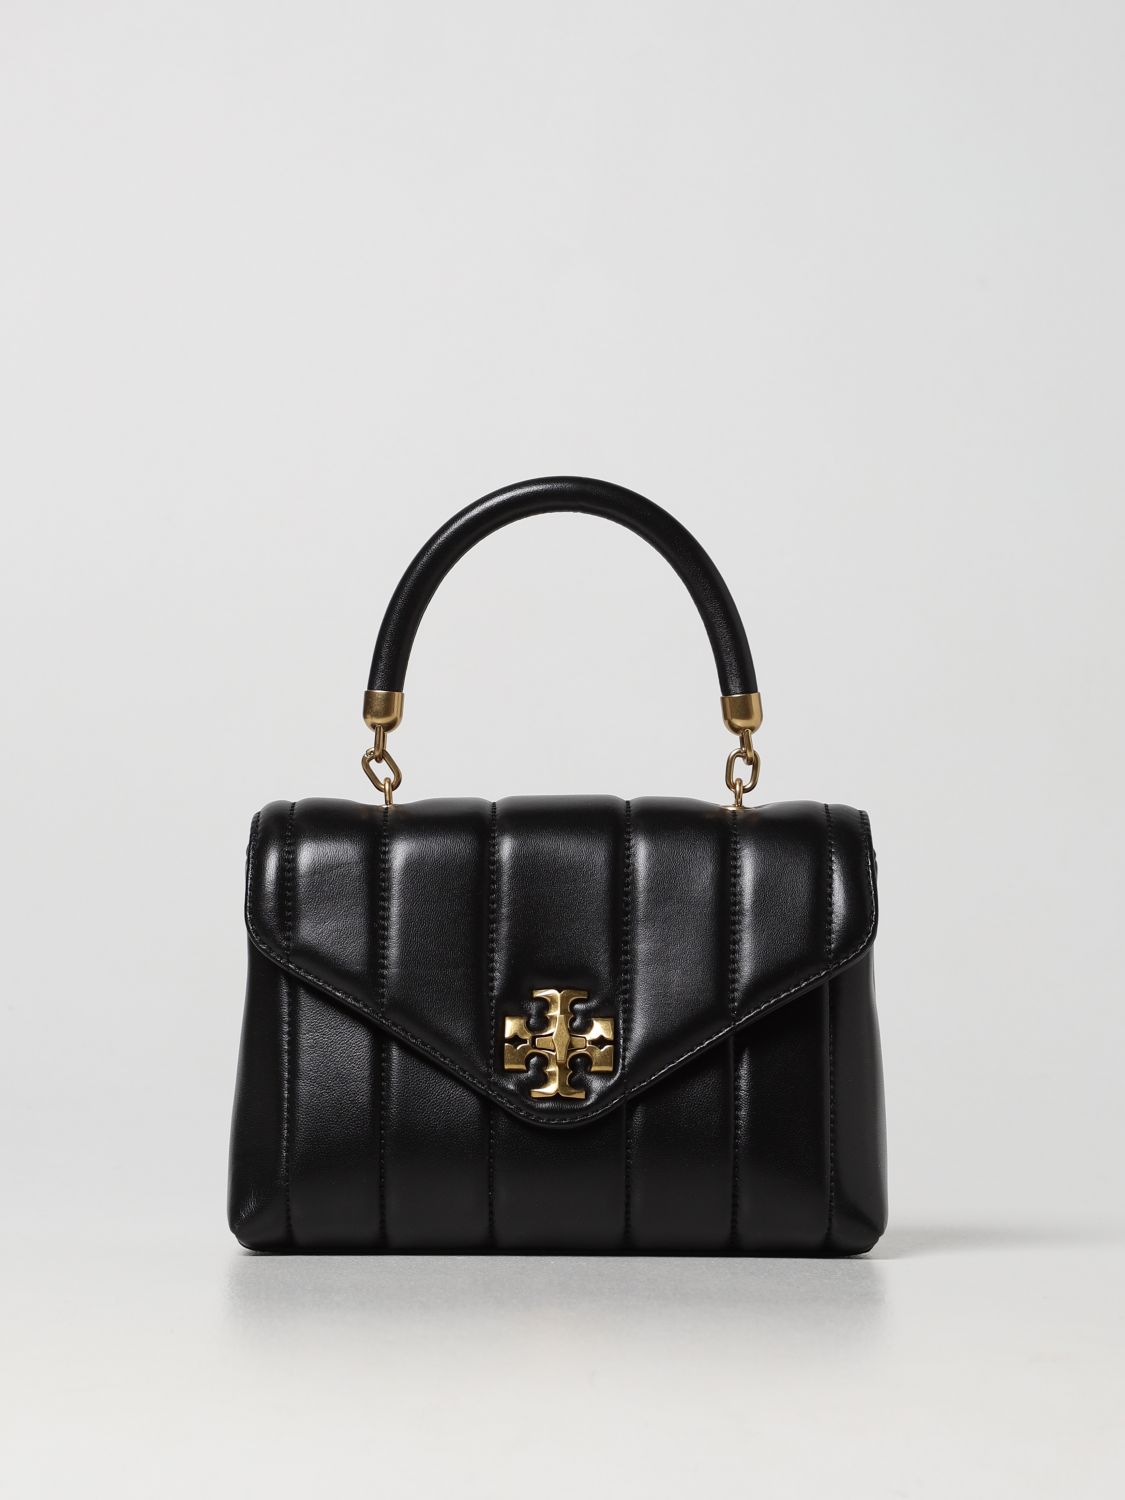 TORY BURCH: Kira bag in quilted leather - Black | Tory Burch handbag ...